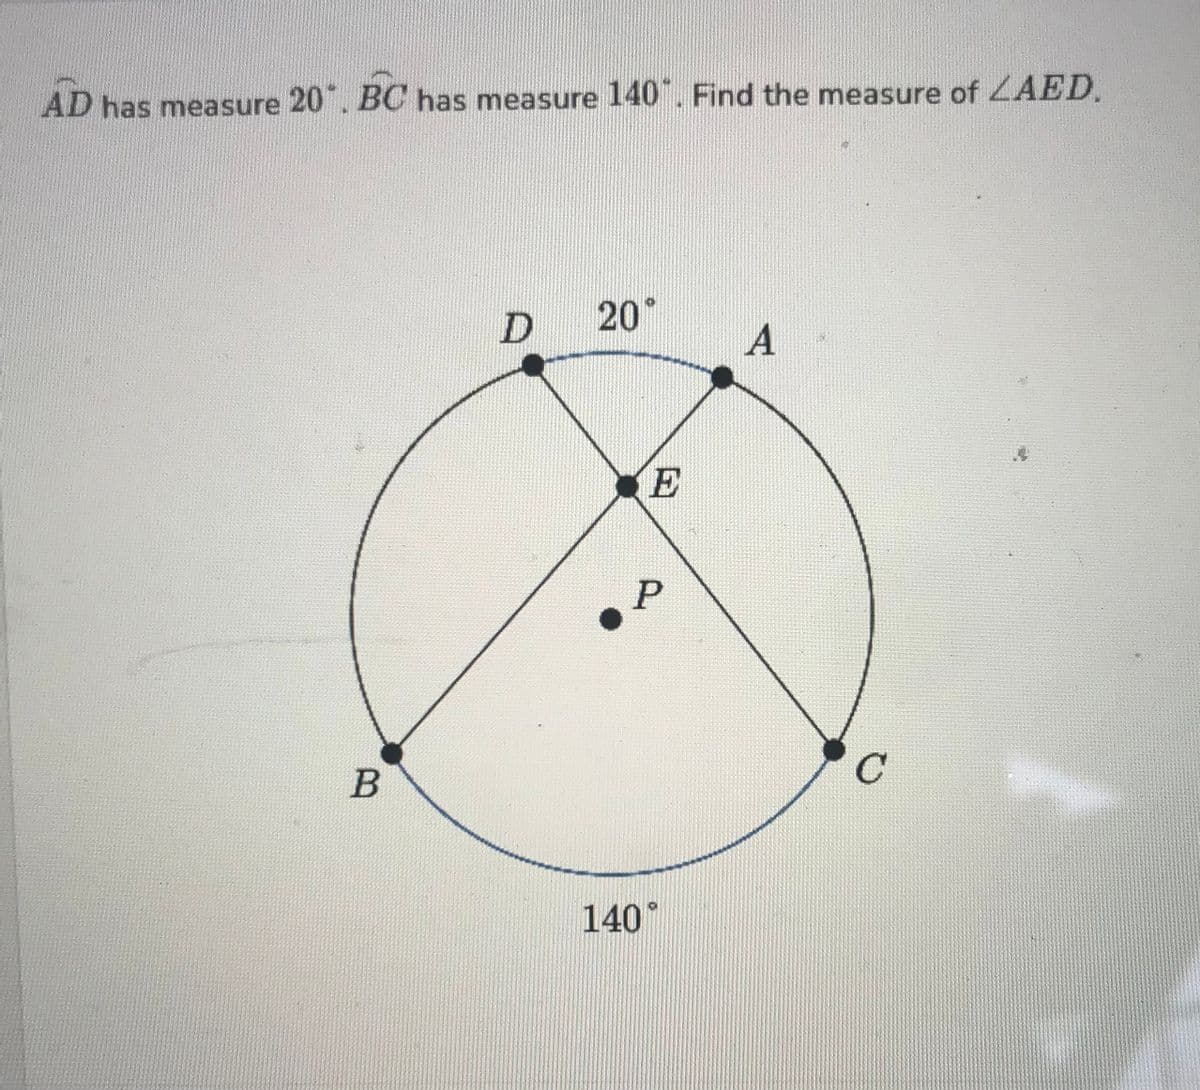 AD has measure 20. BC has measure 140. Find the measure of ZAED.
B
D 20°
E
P
140
A
C